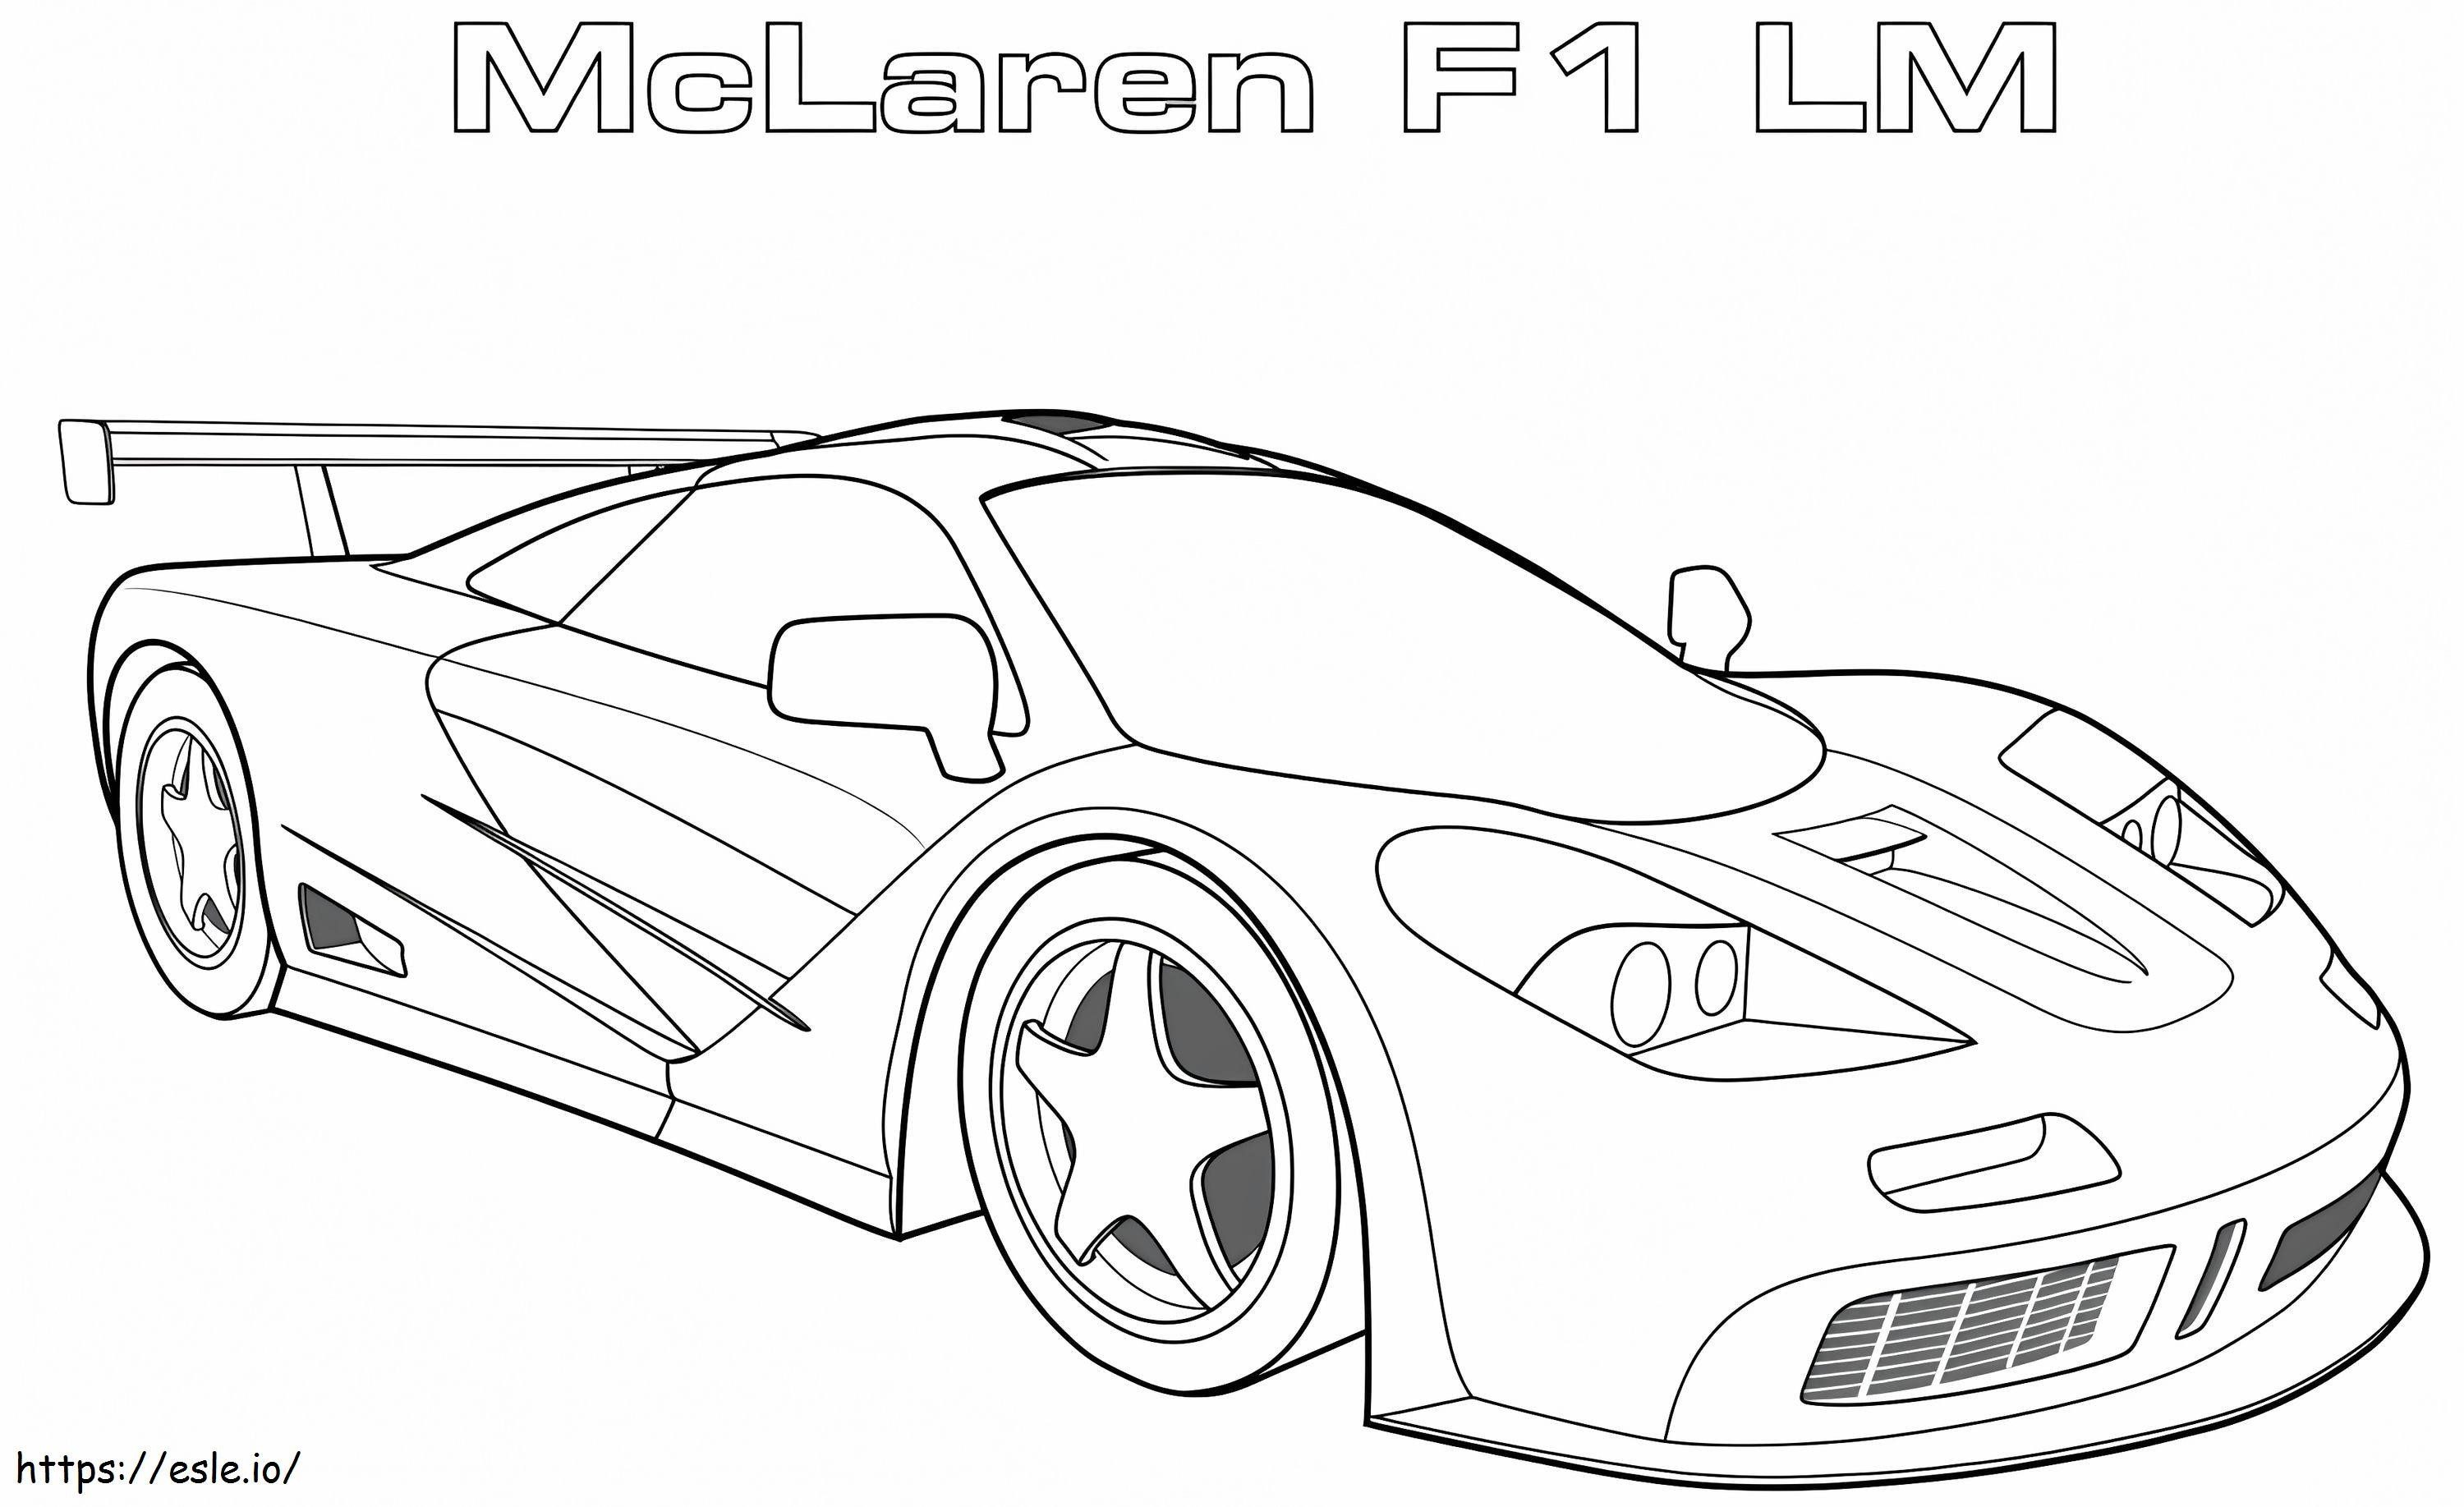  McLaren F1 Lm A4 Gambar Mewarnai